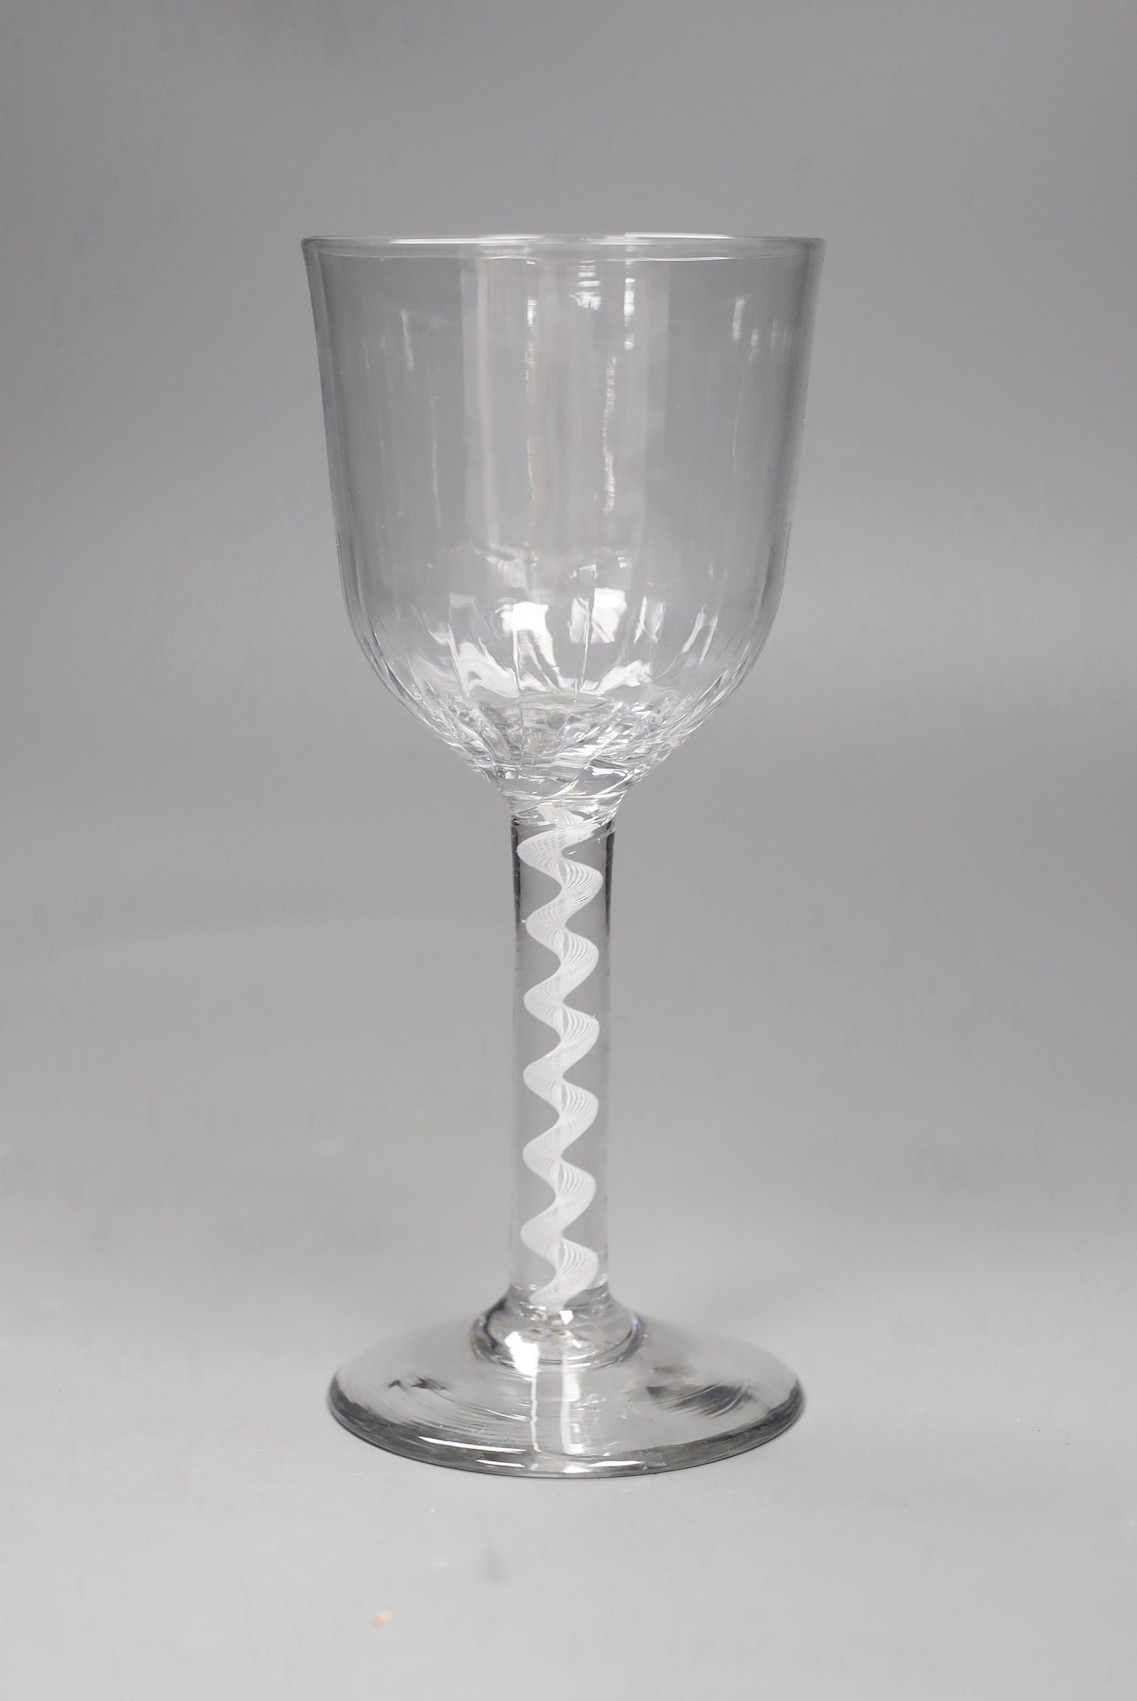 An opaque twist wine goblet, 18th century, 19cms high